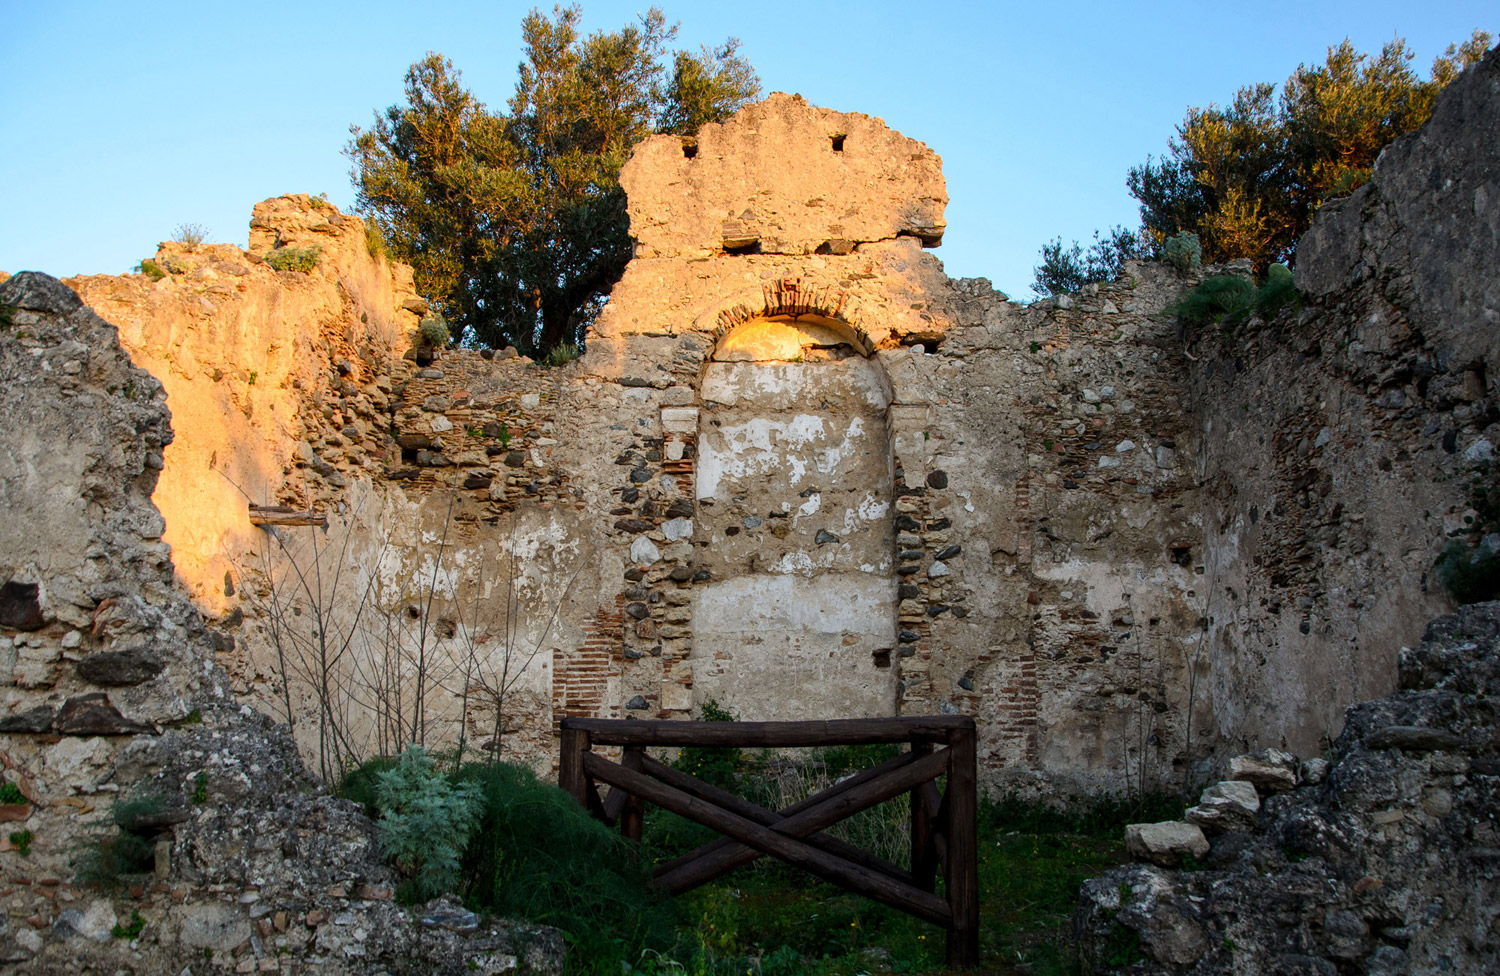 Archaeological Park of Motta Sant’Agata